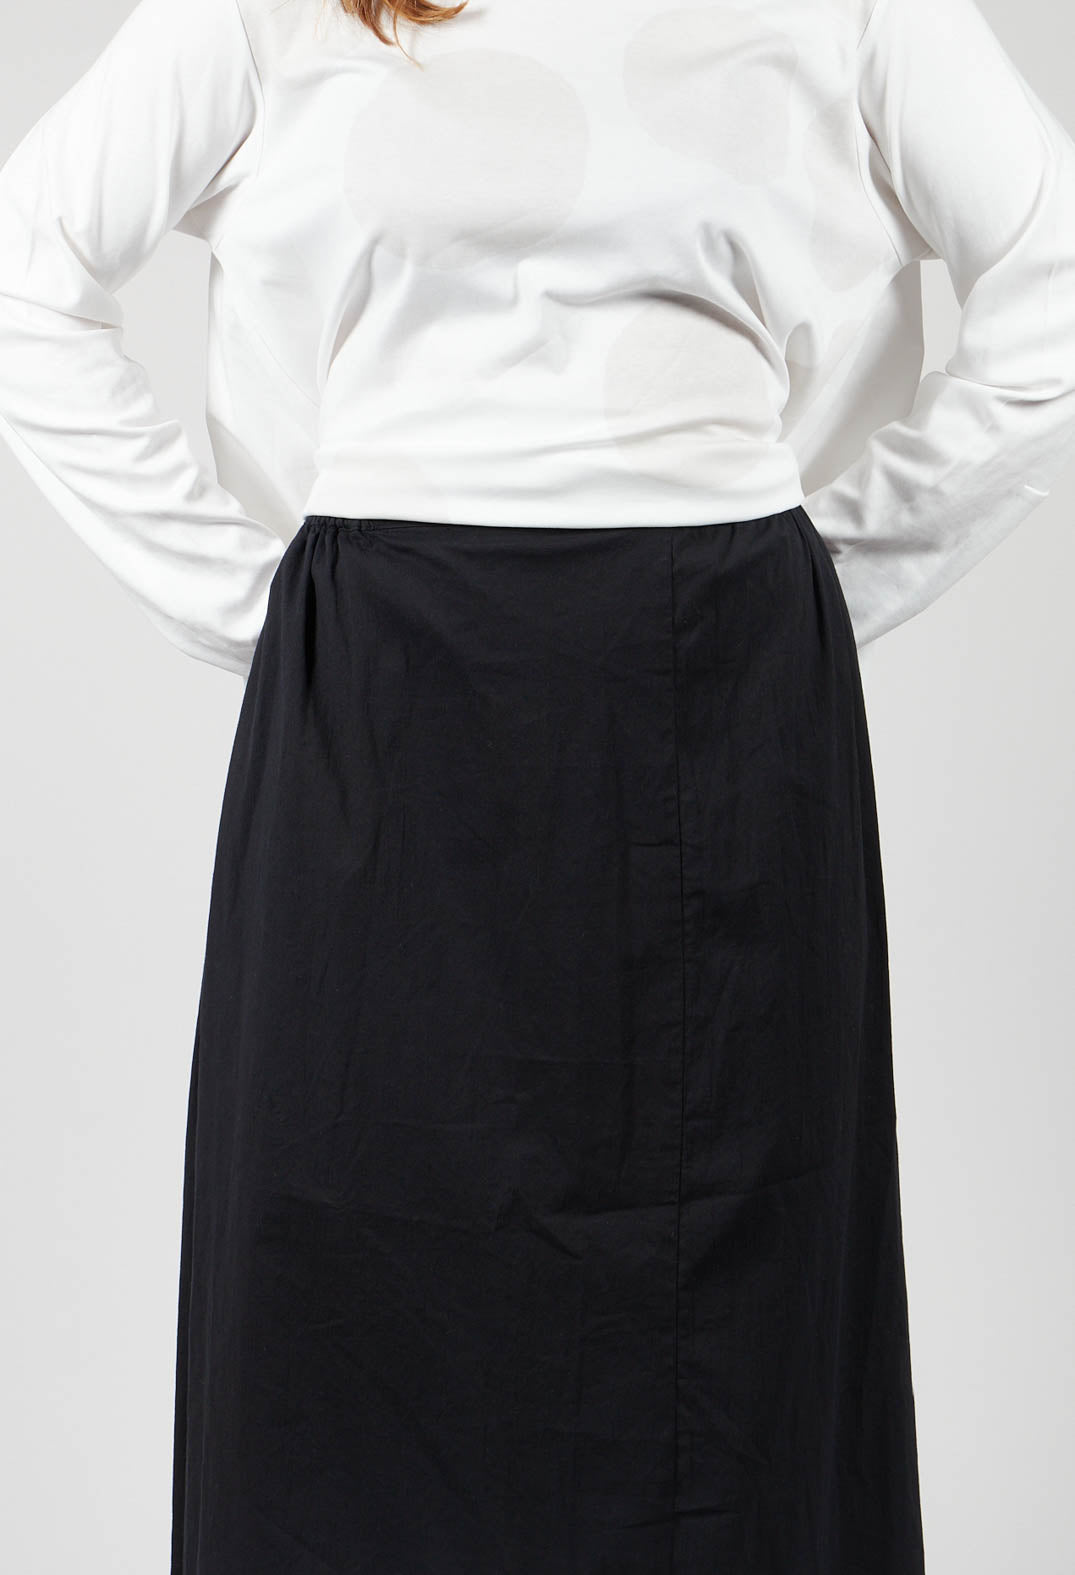 Contrast Raw Hem Skirt Trousers in Black / White